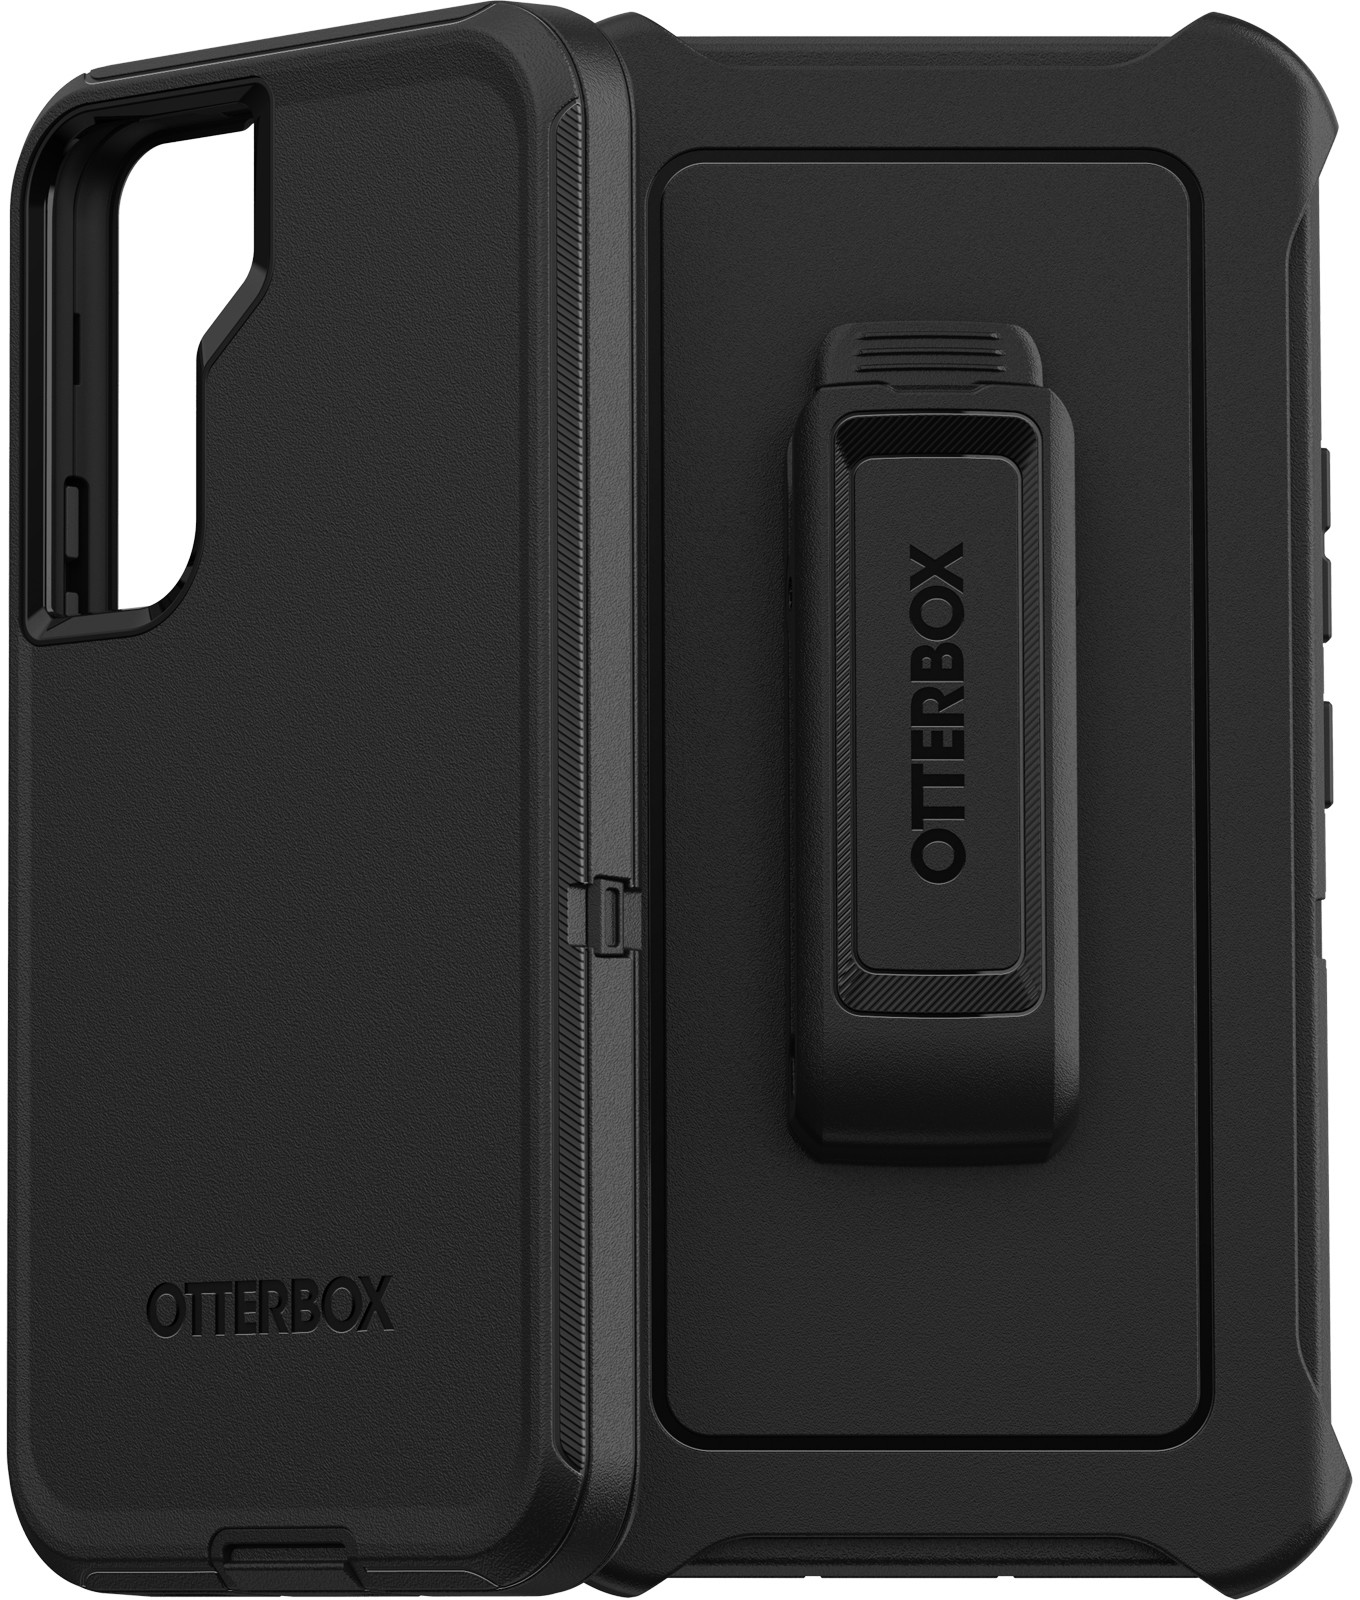 Zdjęcia - Etui OtterBox Defender - obudowa ochronna do Samsung Galaxy S22+ 5G  (czarna)